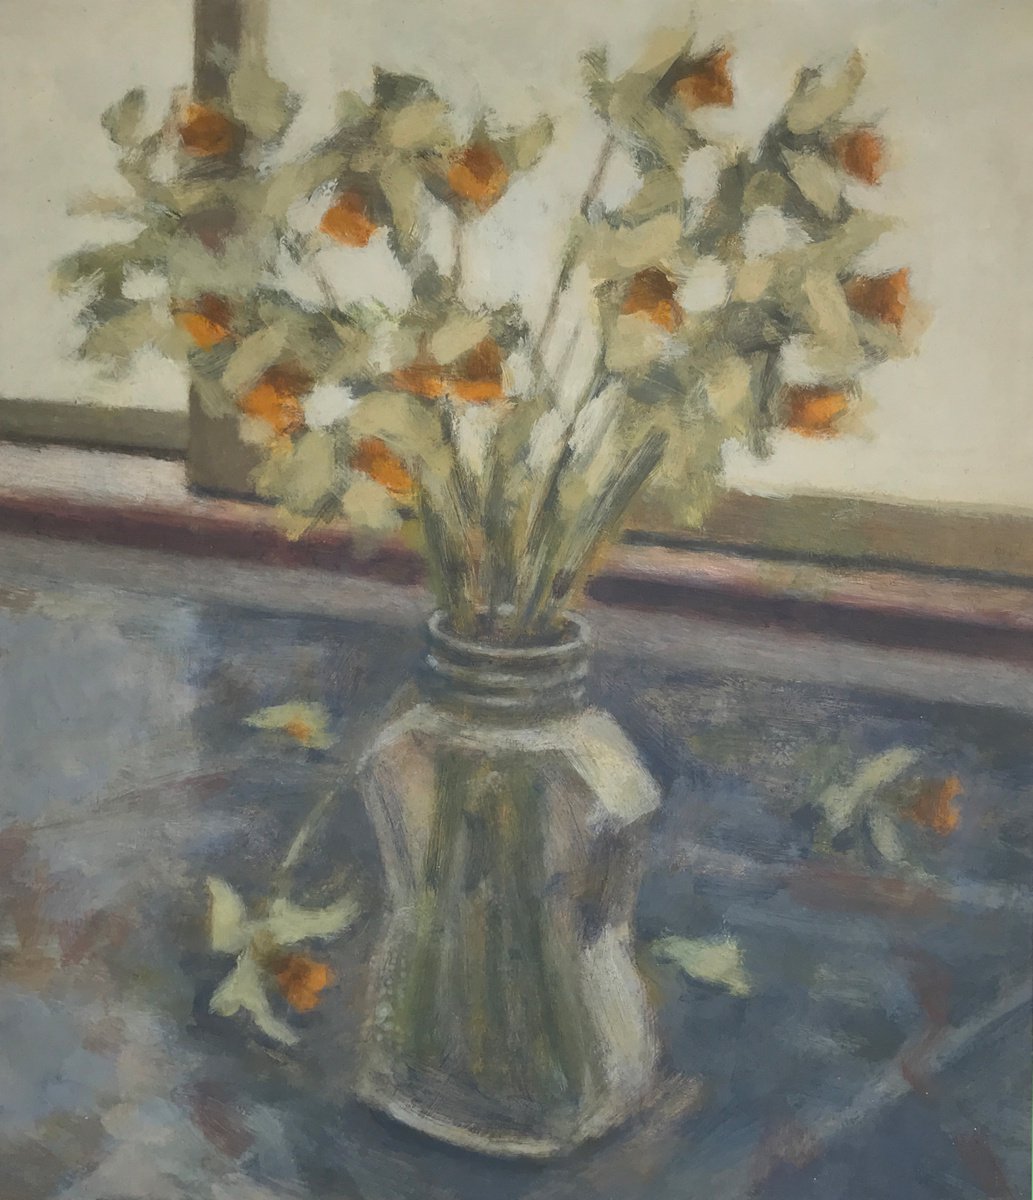 Daffodils in a jar by Hugo Lines